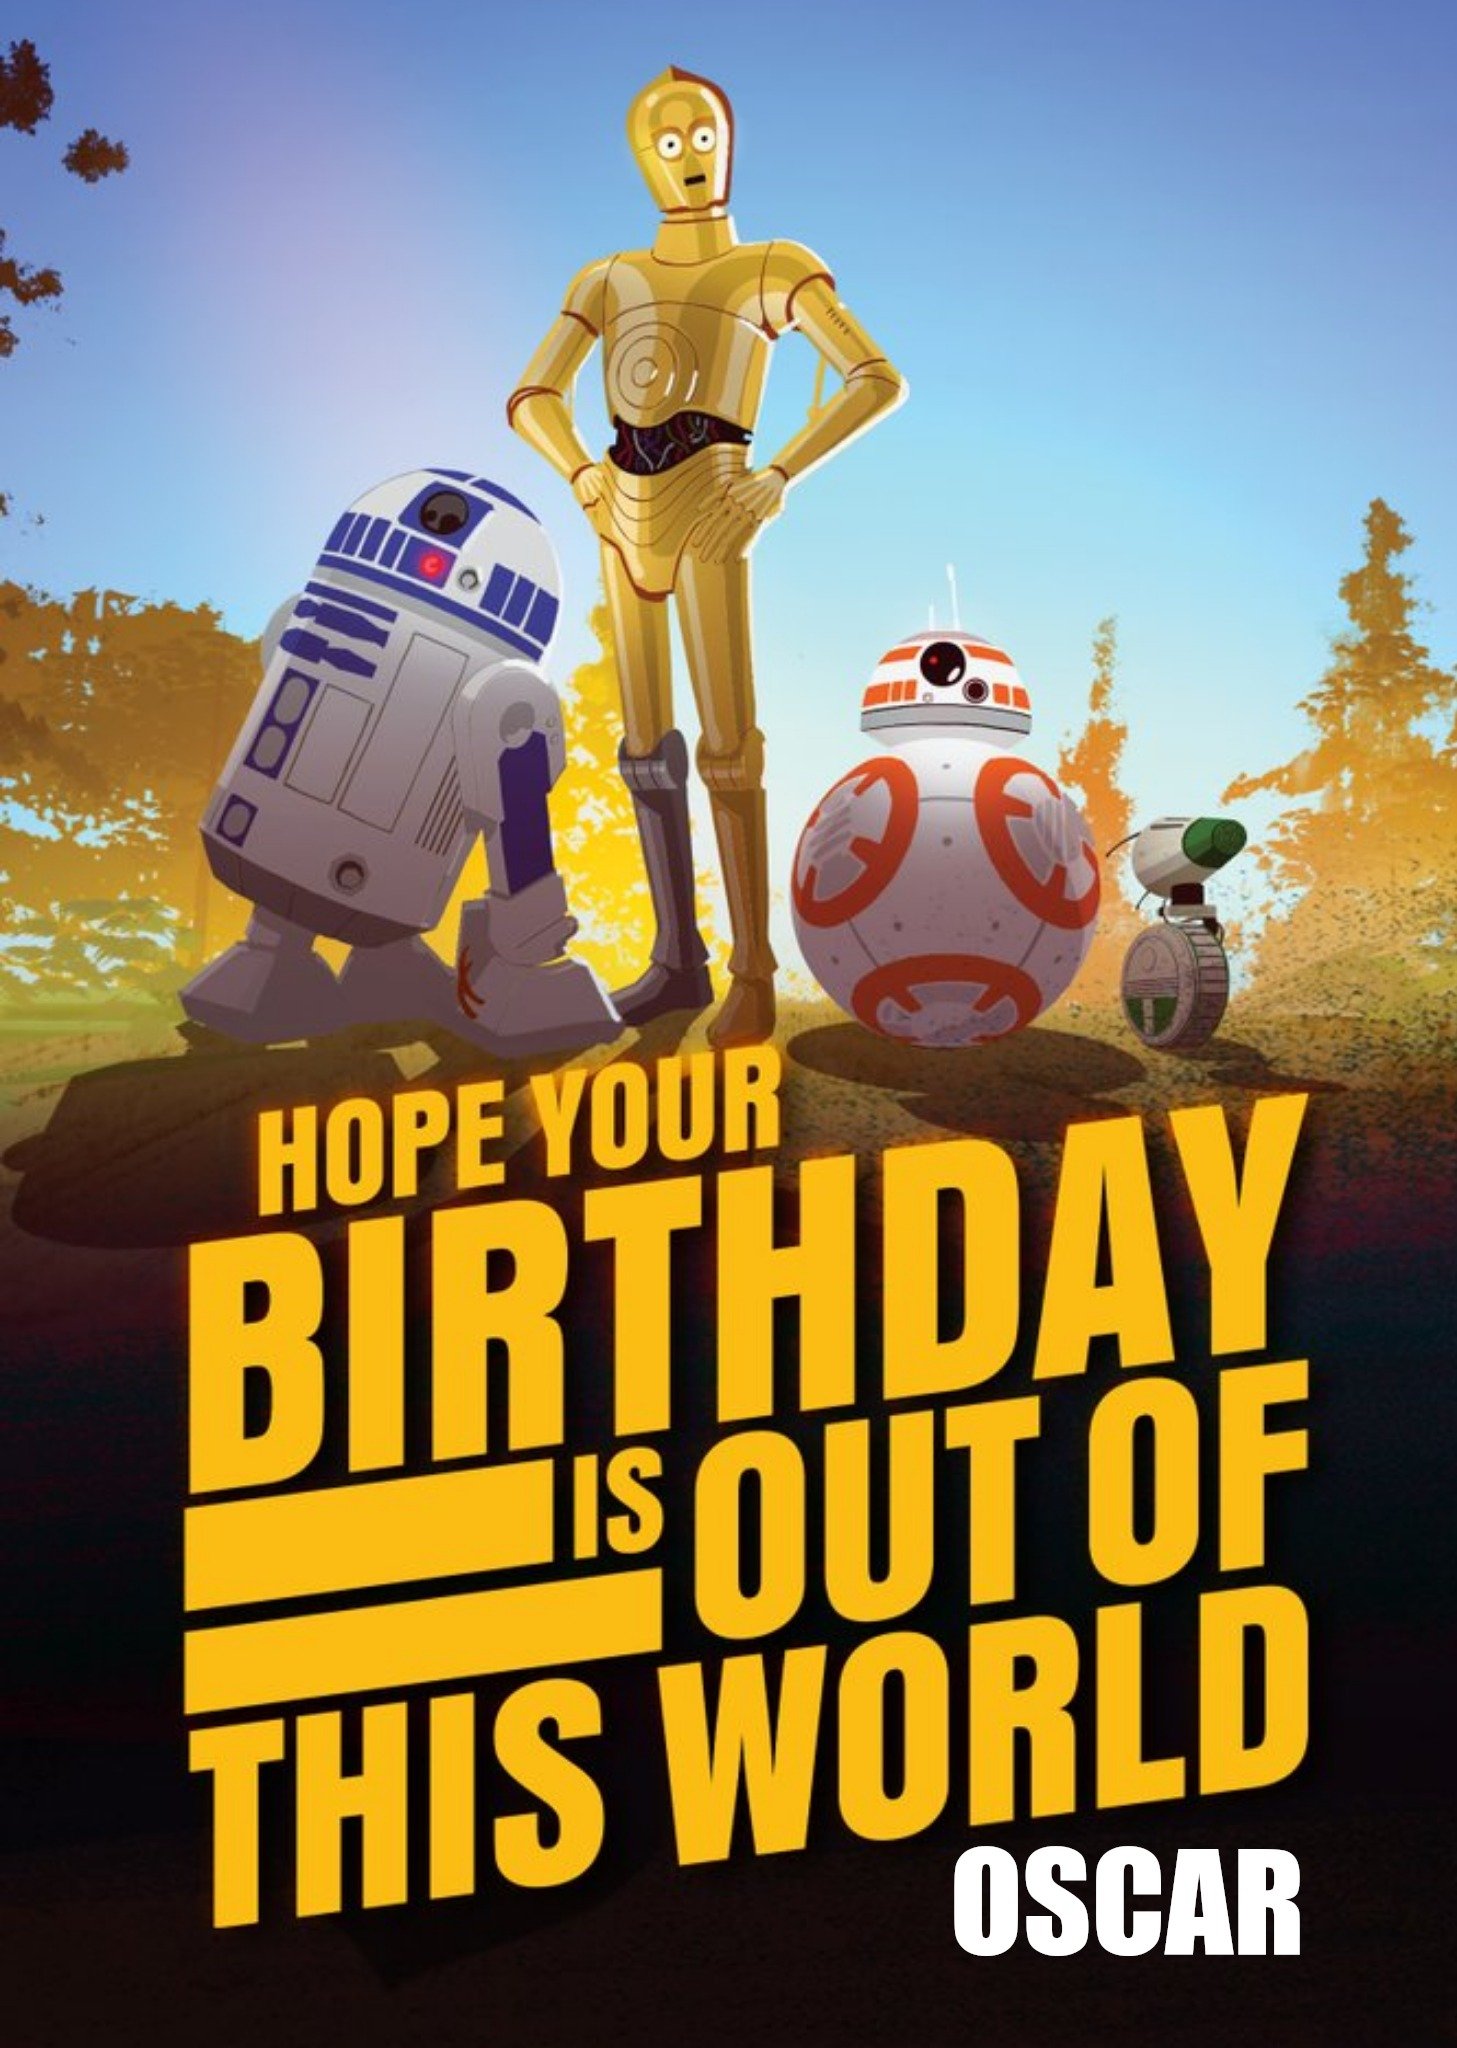 Disney Star Wars Galaxy Of Adventures Droids Birthday Card Ecard